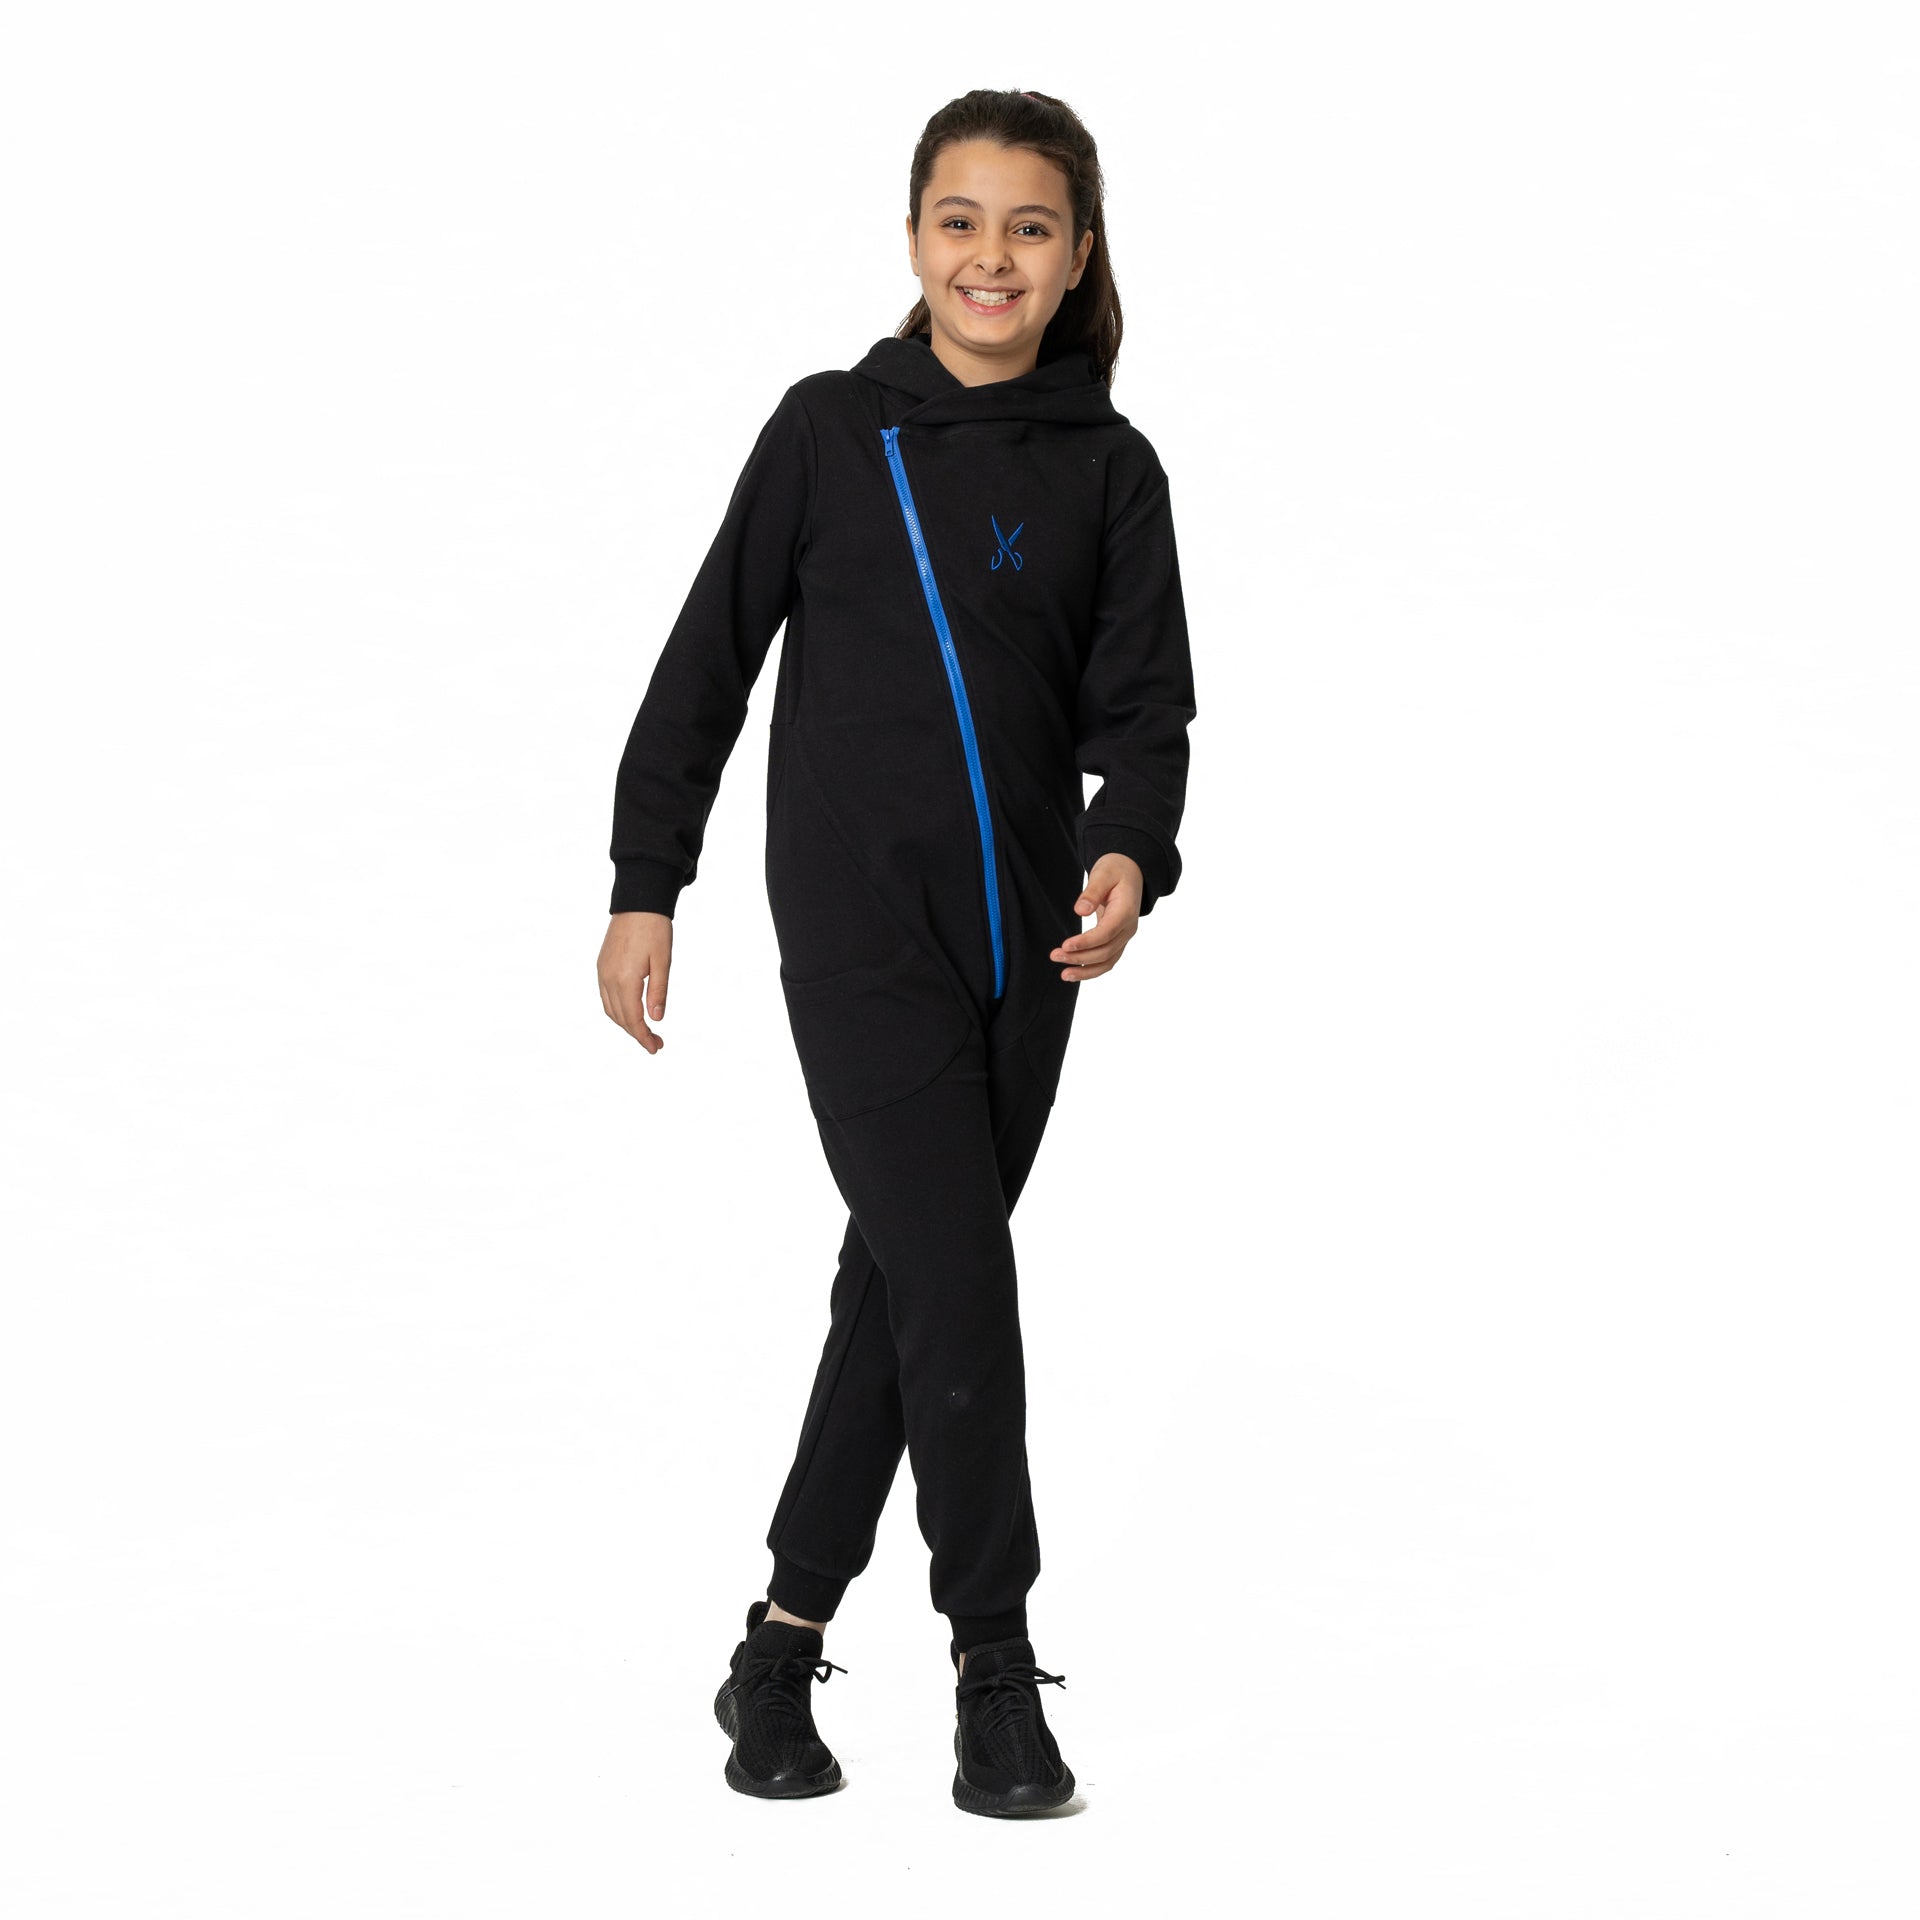 Black Child Jumpsuit From Weaver Design